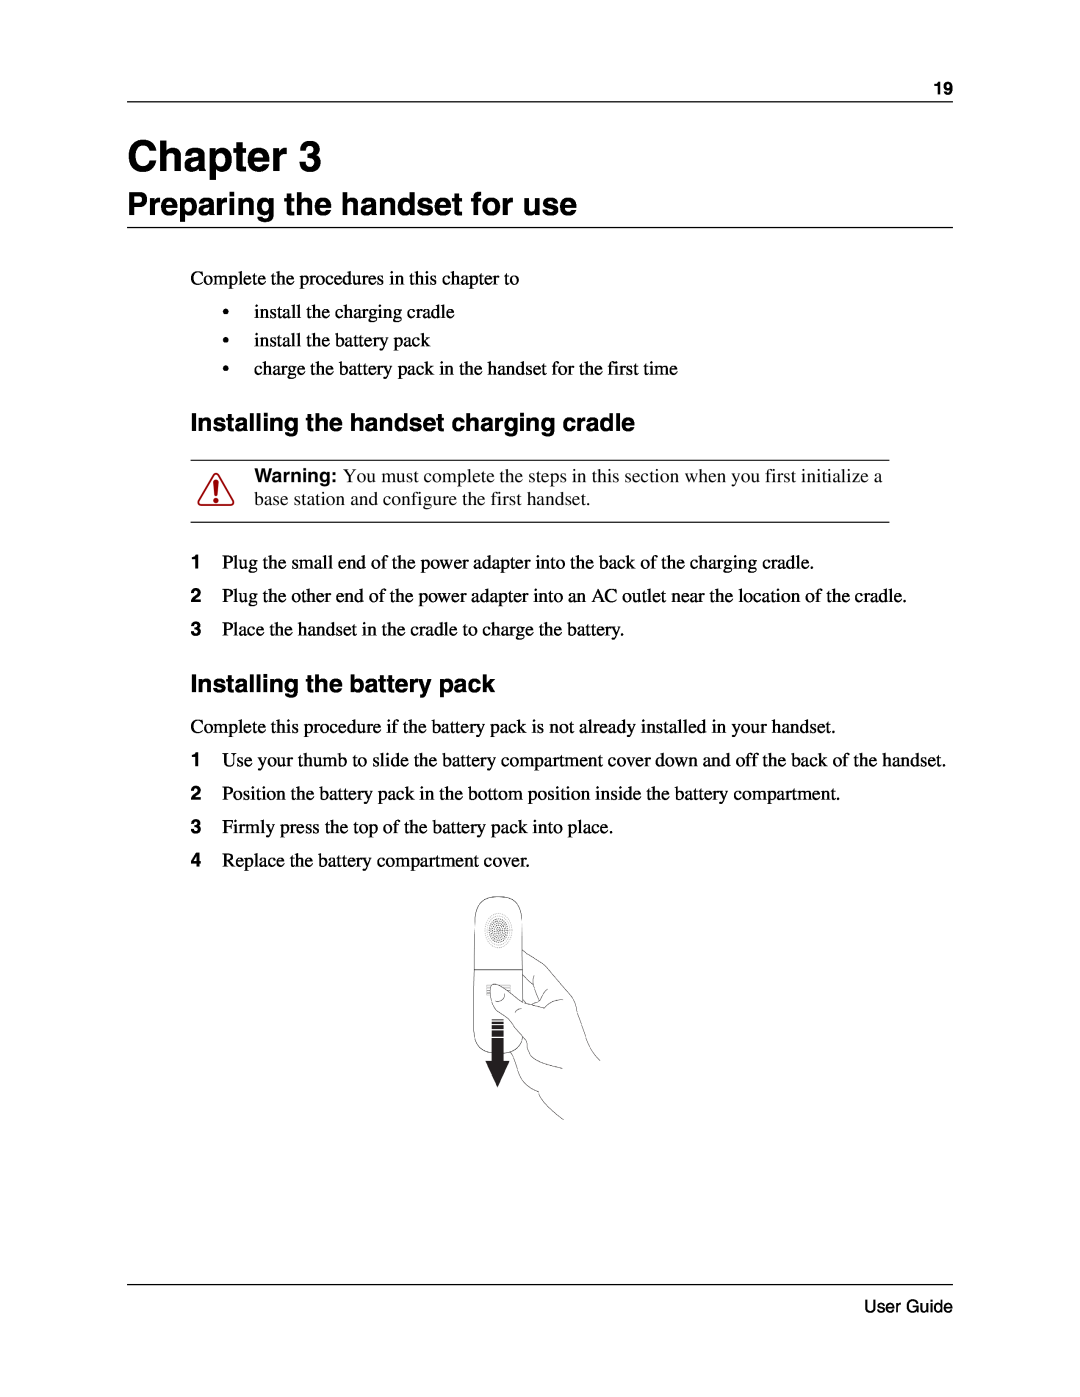 Nortel Networks T7406E Preparing the handset for use, Installing the handset charging cradle, Installing the battery pack 